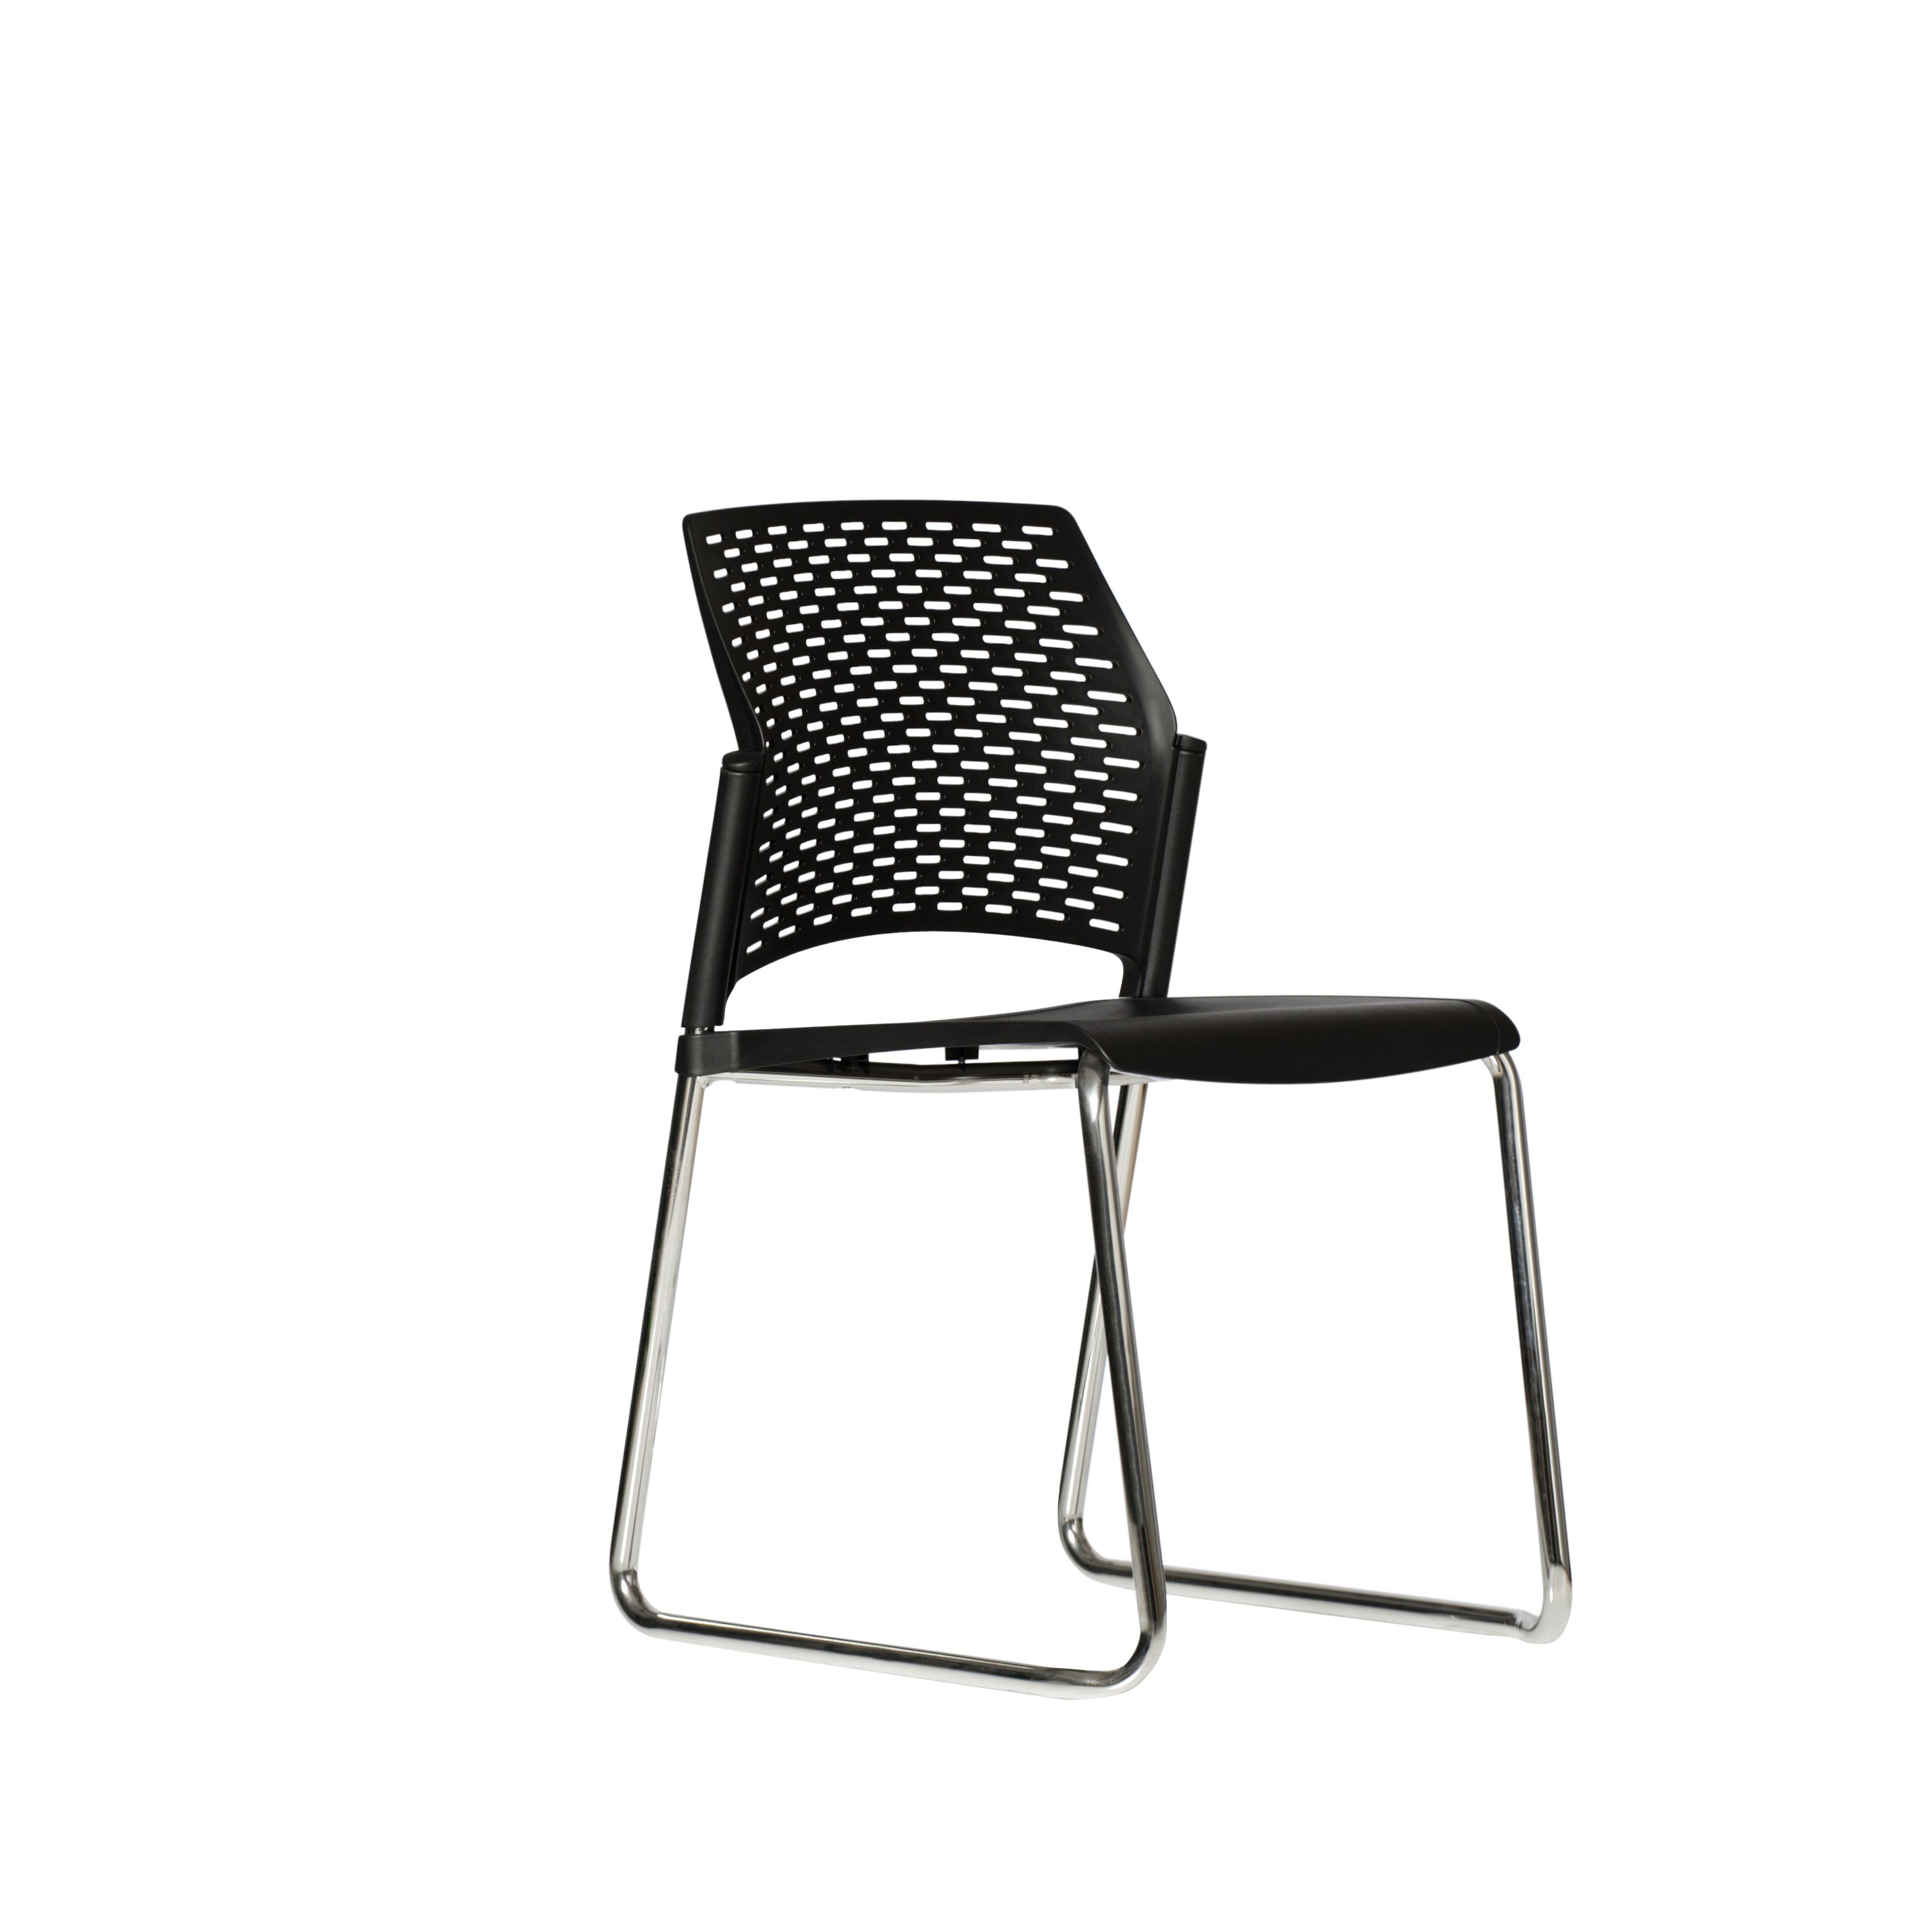 Rewinder Chair by Direct Ergonomics